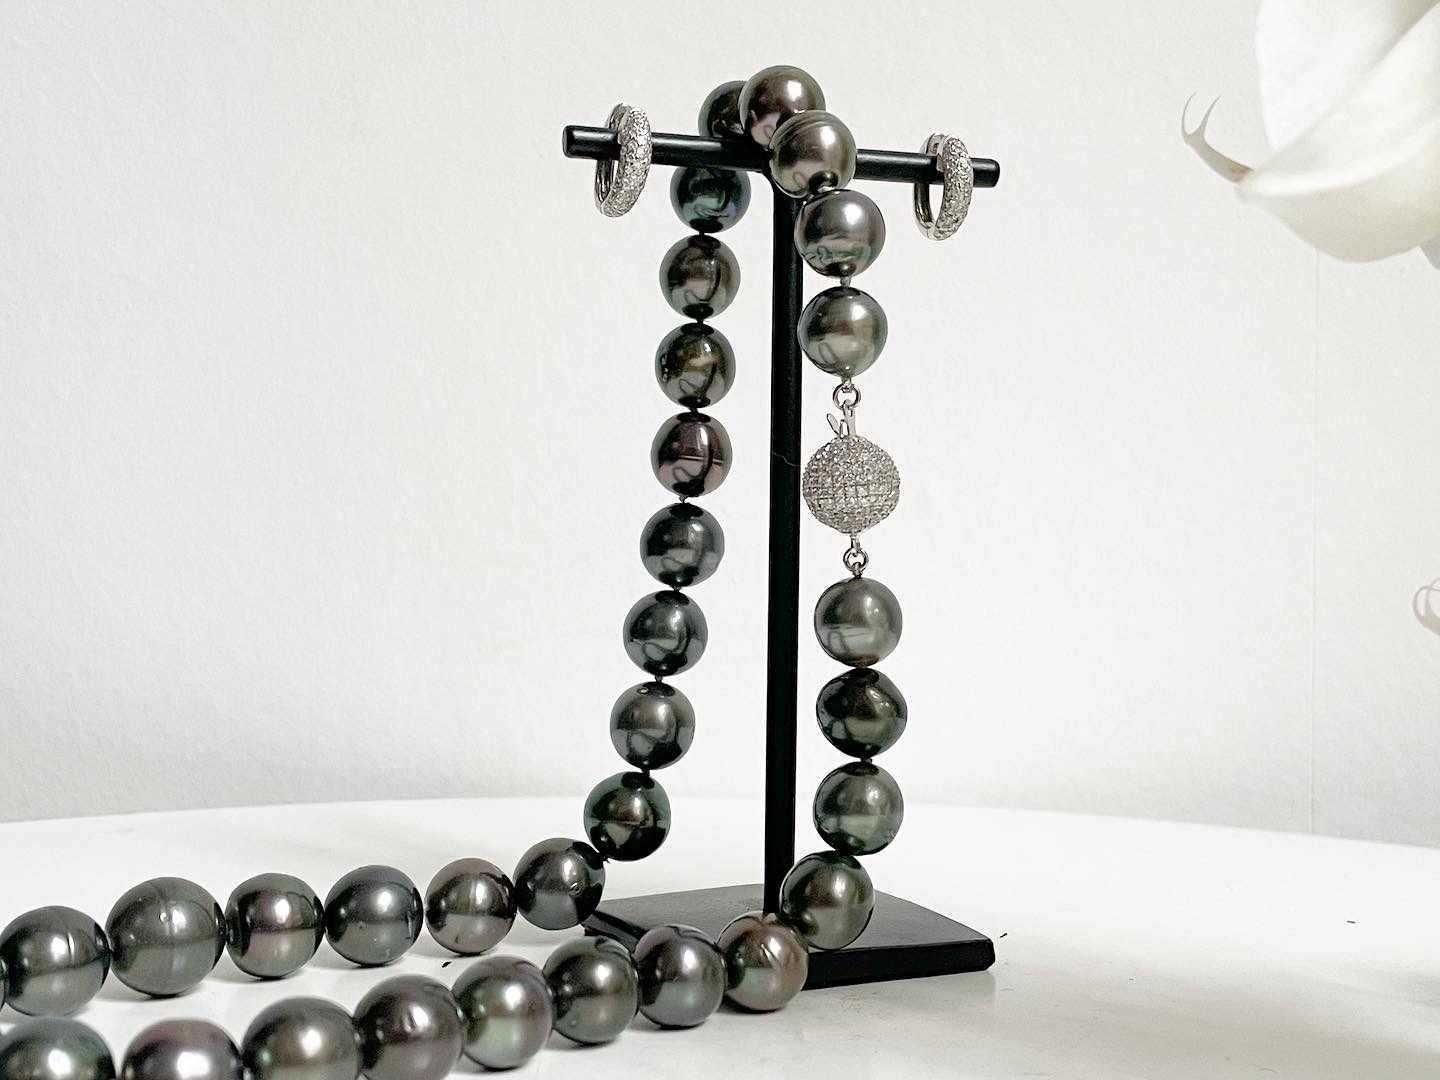 perles-tahiti-perles-grises-collier-bague-bo-ancien-bijoux-luxe-or-et-diamants-aurore-morisse-chestret-5-7